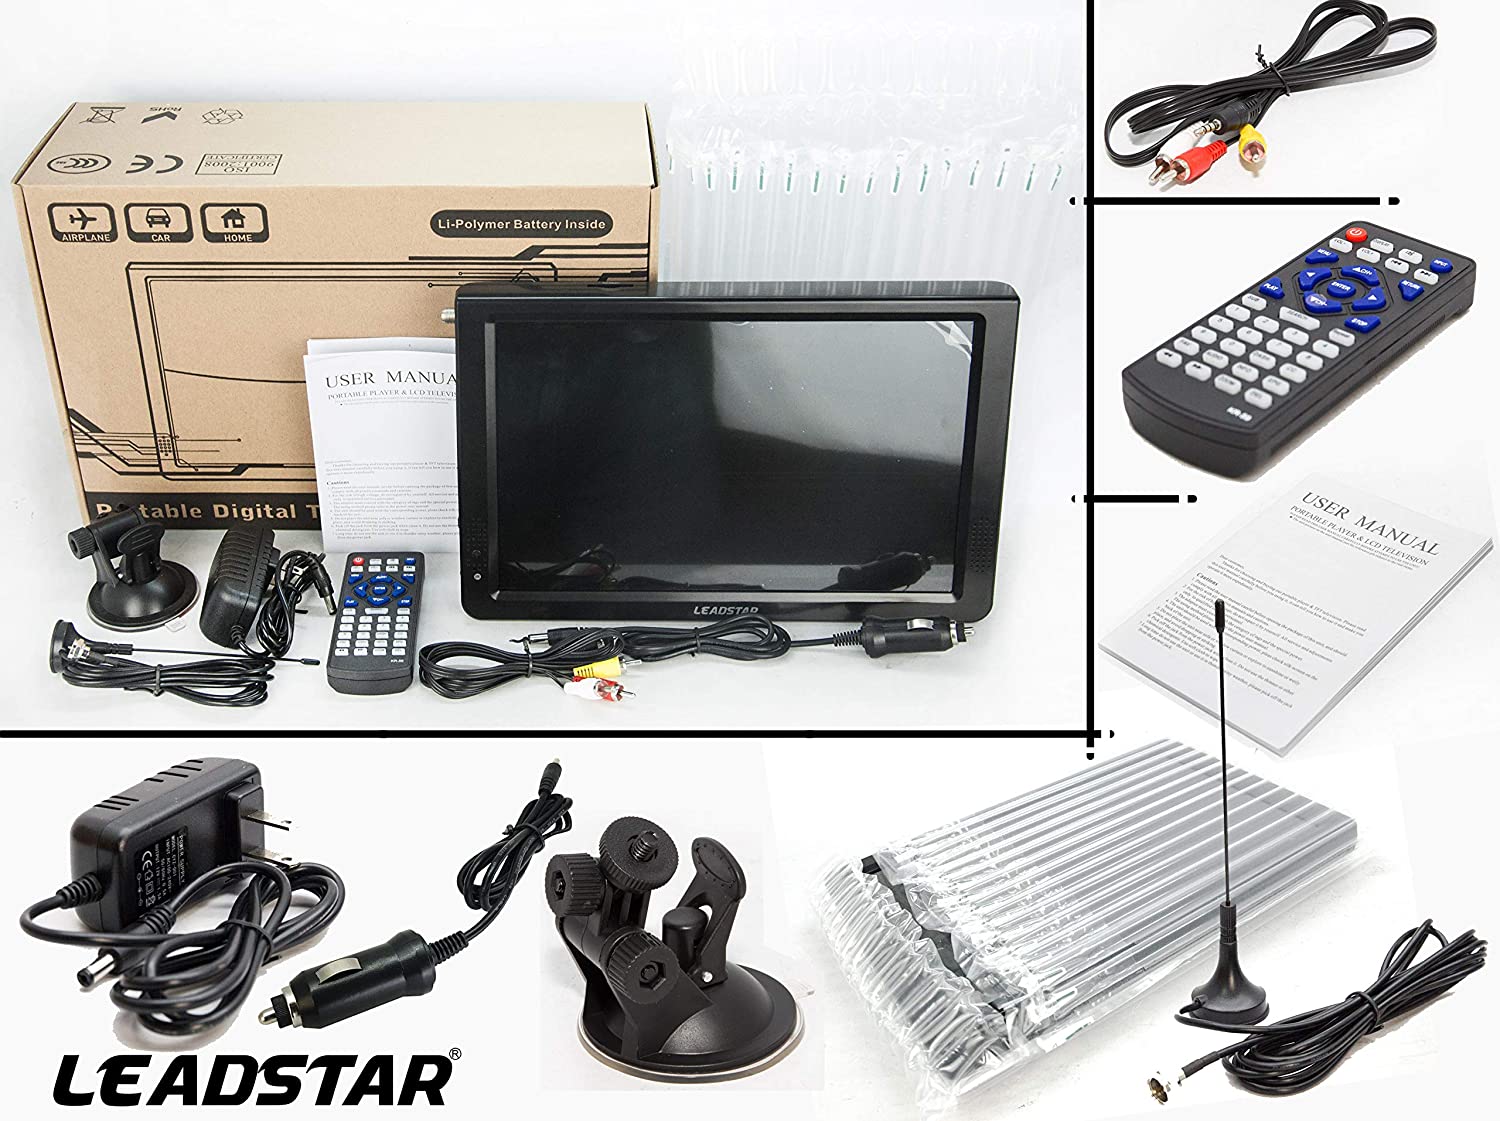 LEADSTAR Televisión/monitor digital portátil de 14 pulgadas ATSC TFT HD  Freeview LED para coche, caravana, campamento, al aire libre o cocina.  Batería